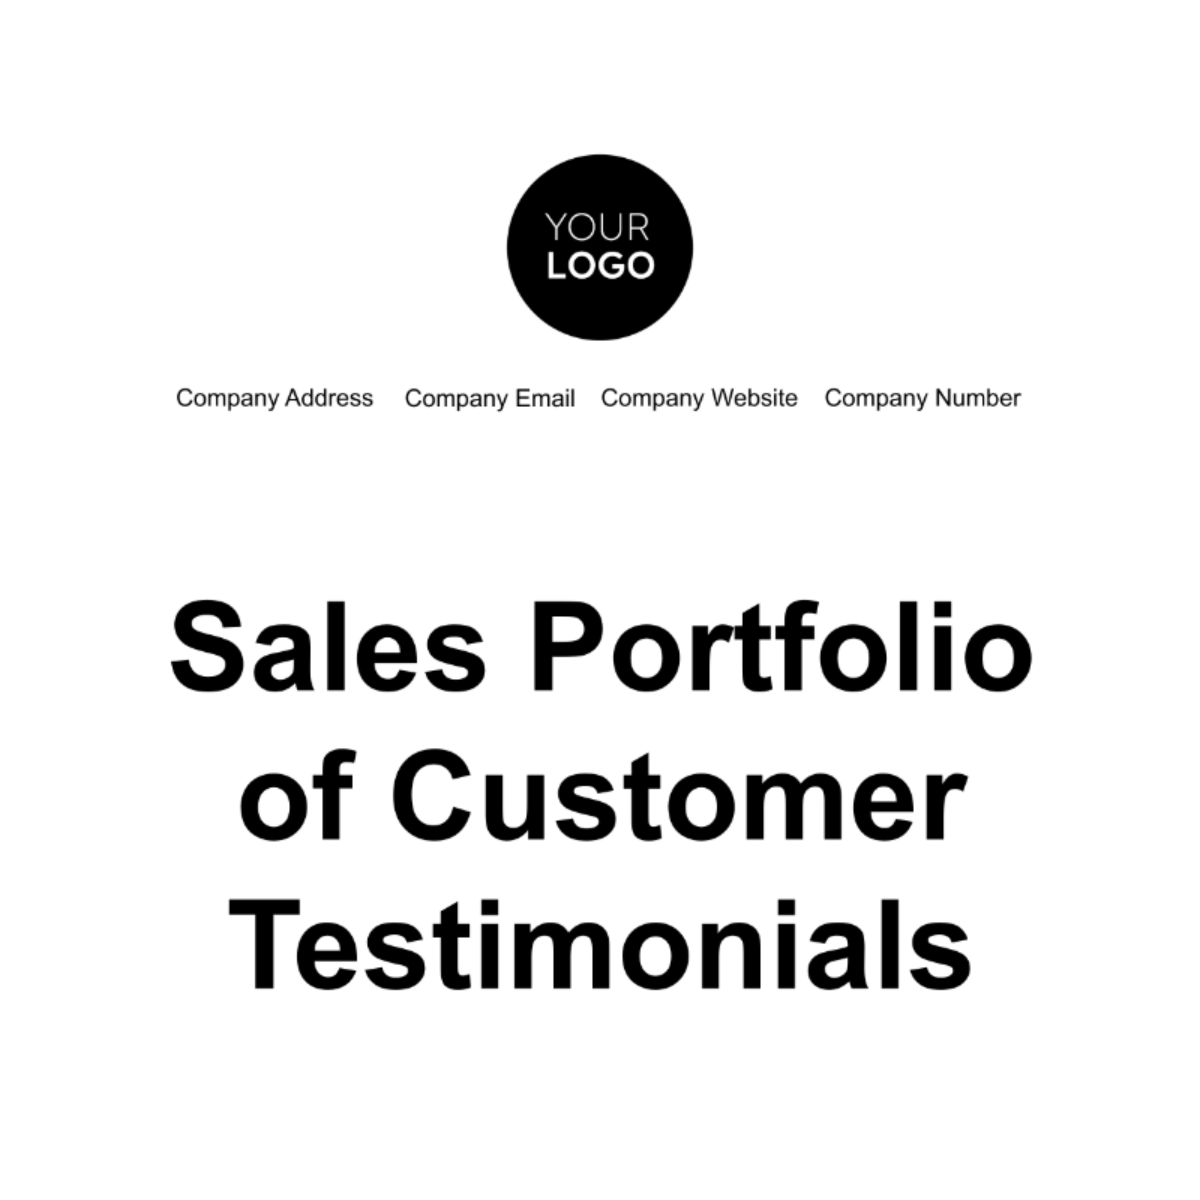 Sales Portfolio of Customer Testimonials Template